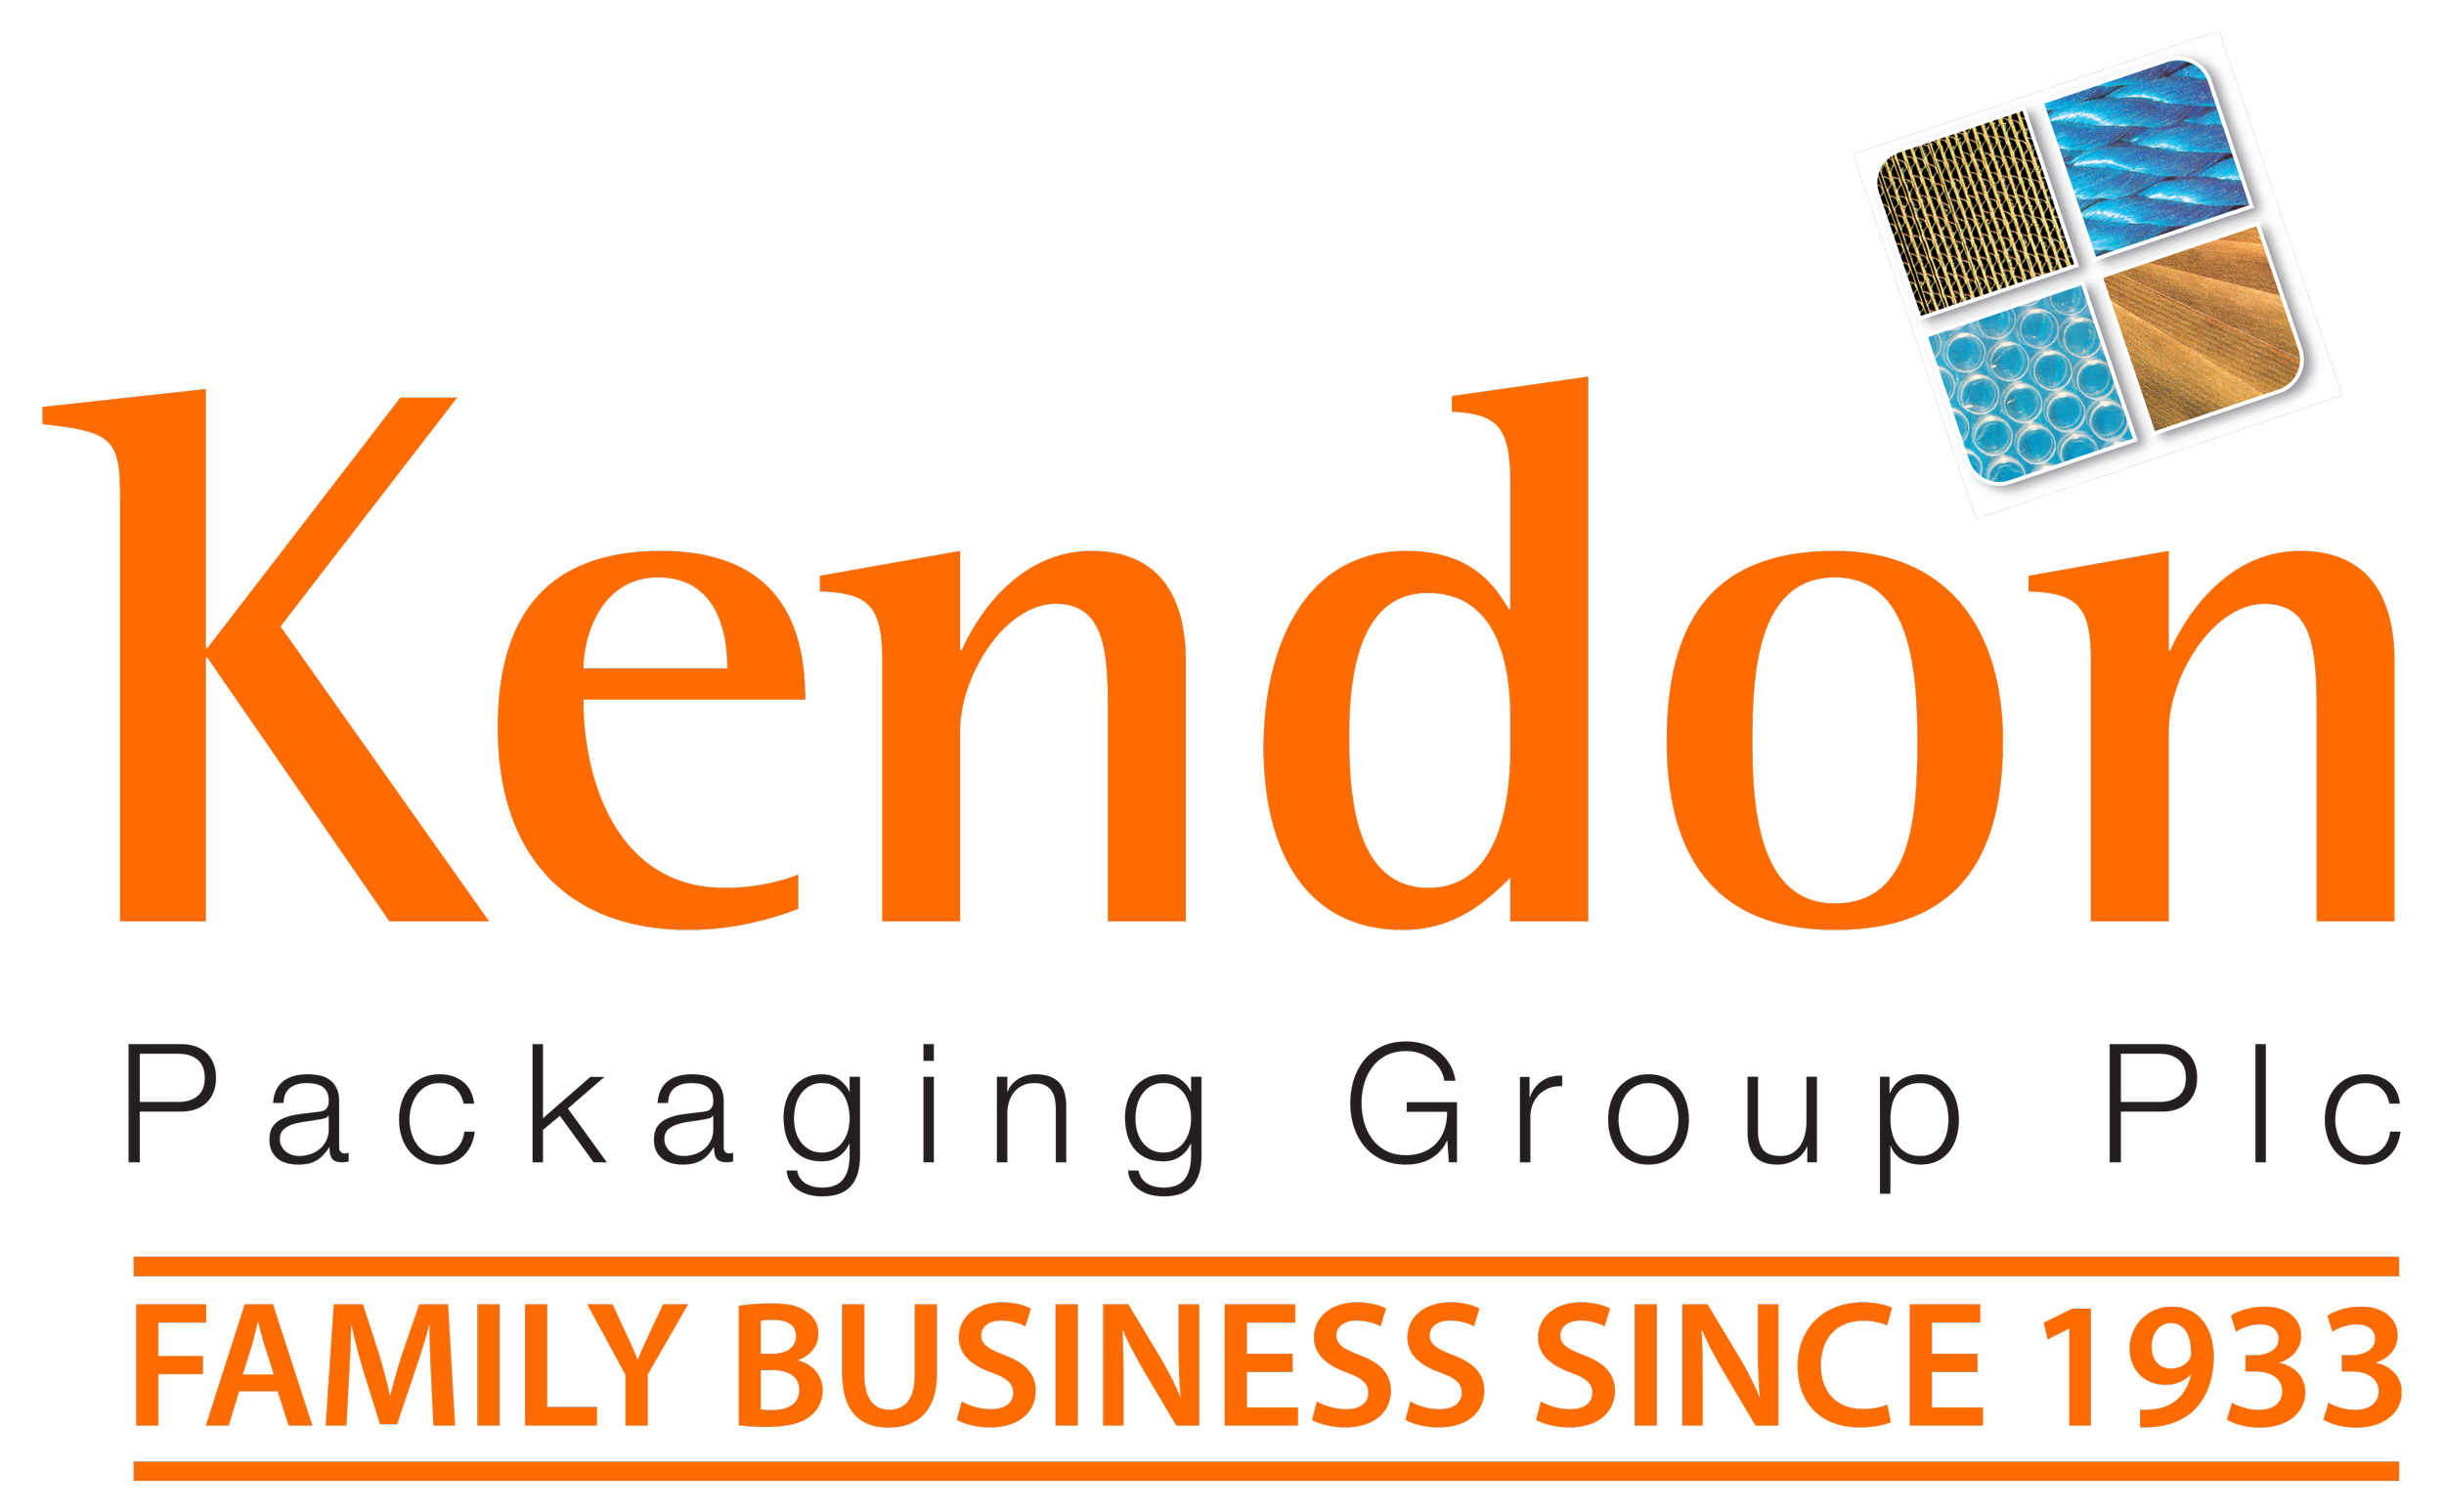 kendon logo.png